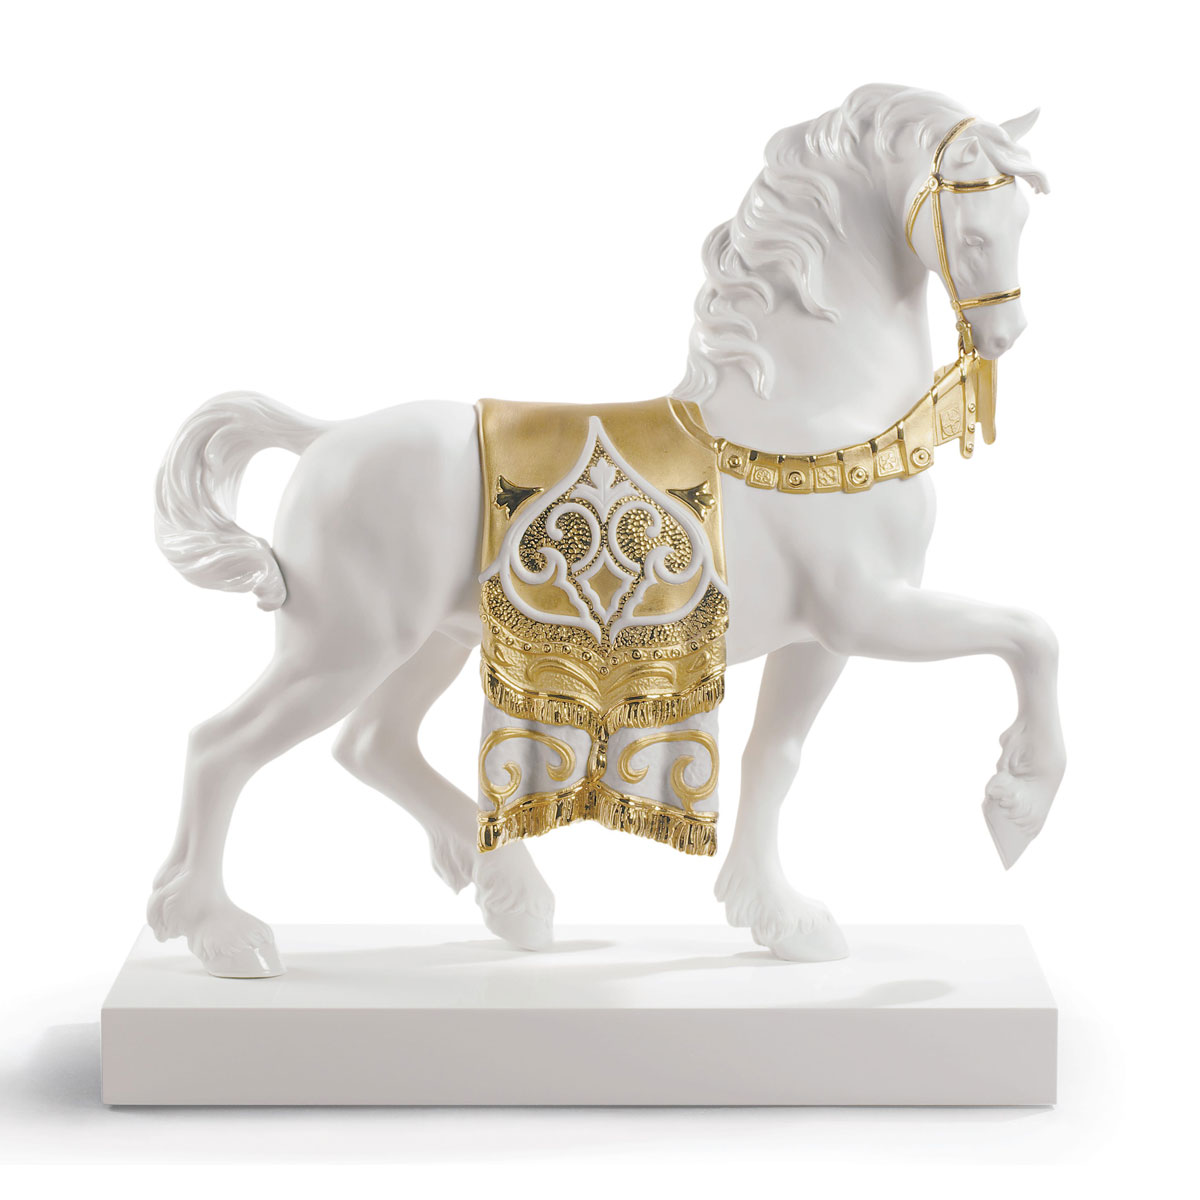 Lladro Classic Sculpture, A Regal Steed Horse Sculpture. Golden Lustre